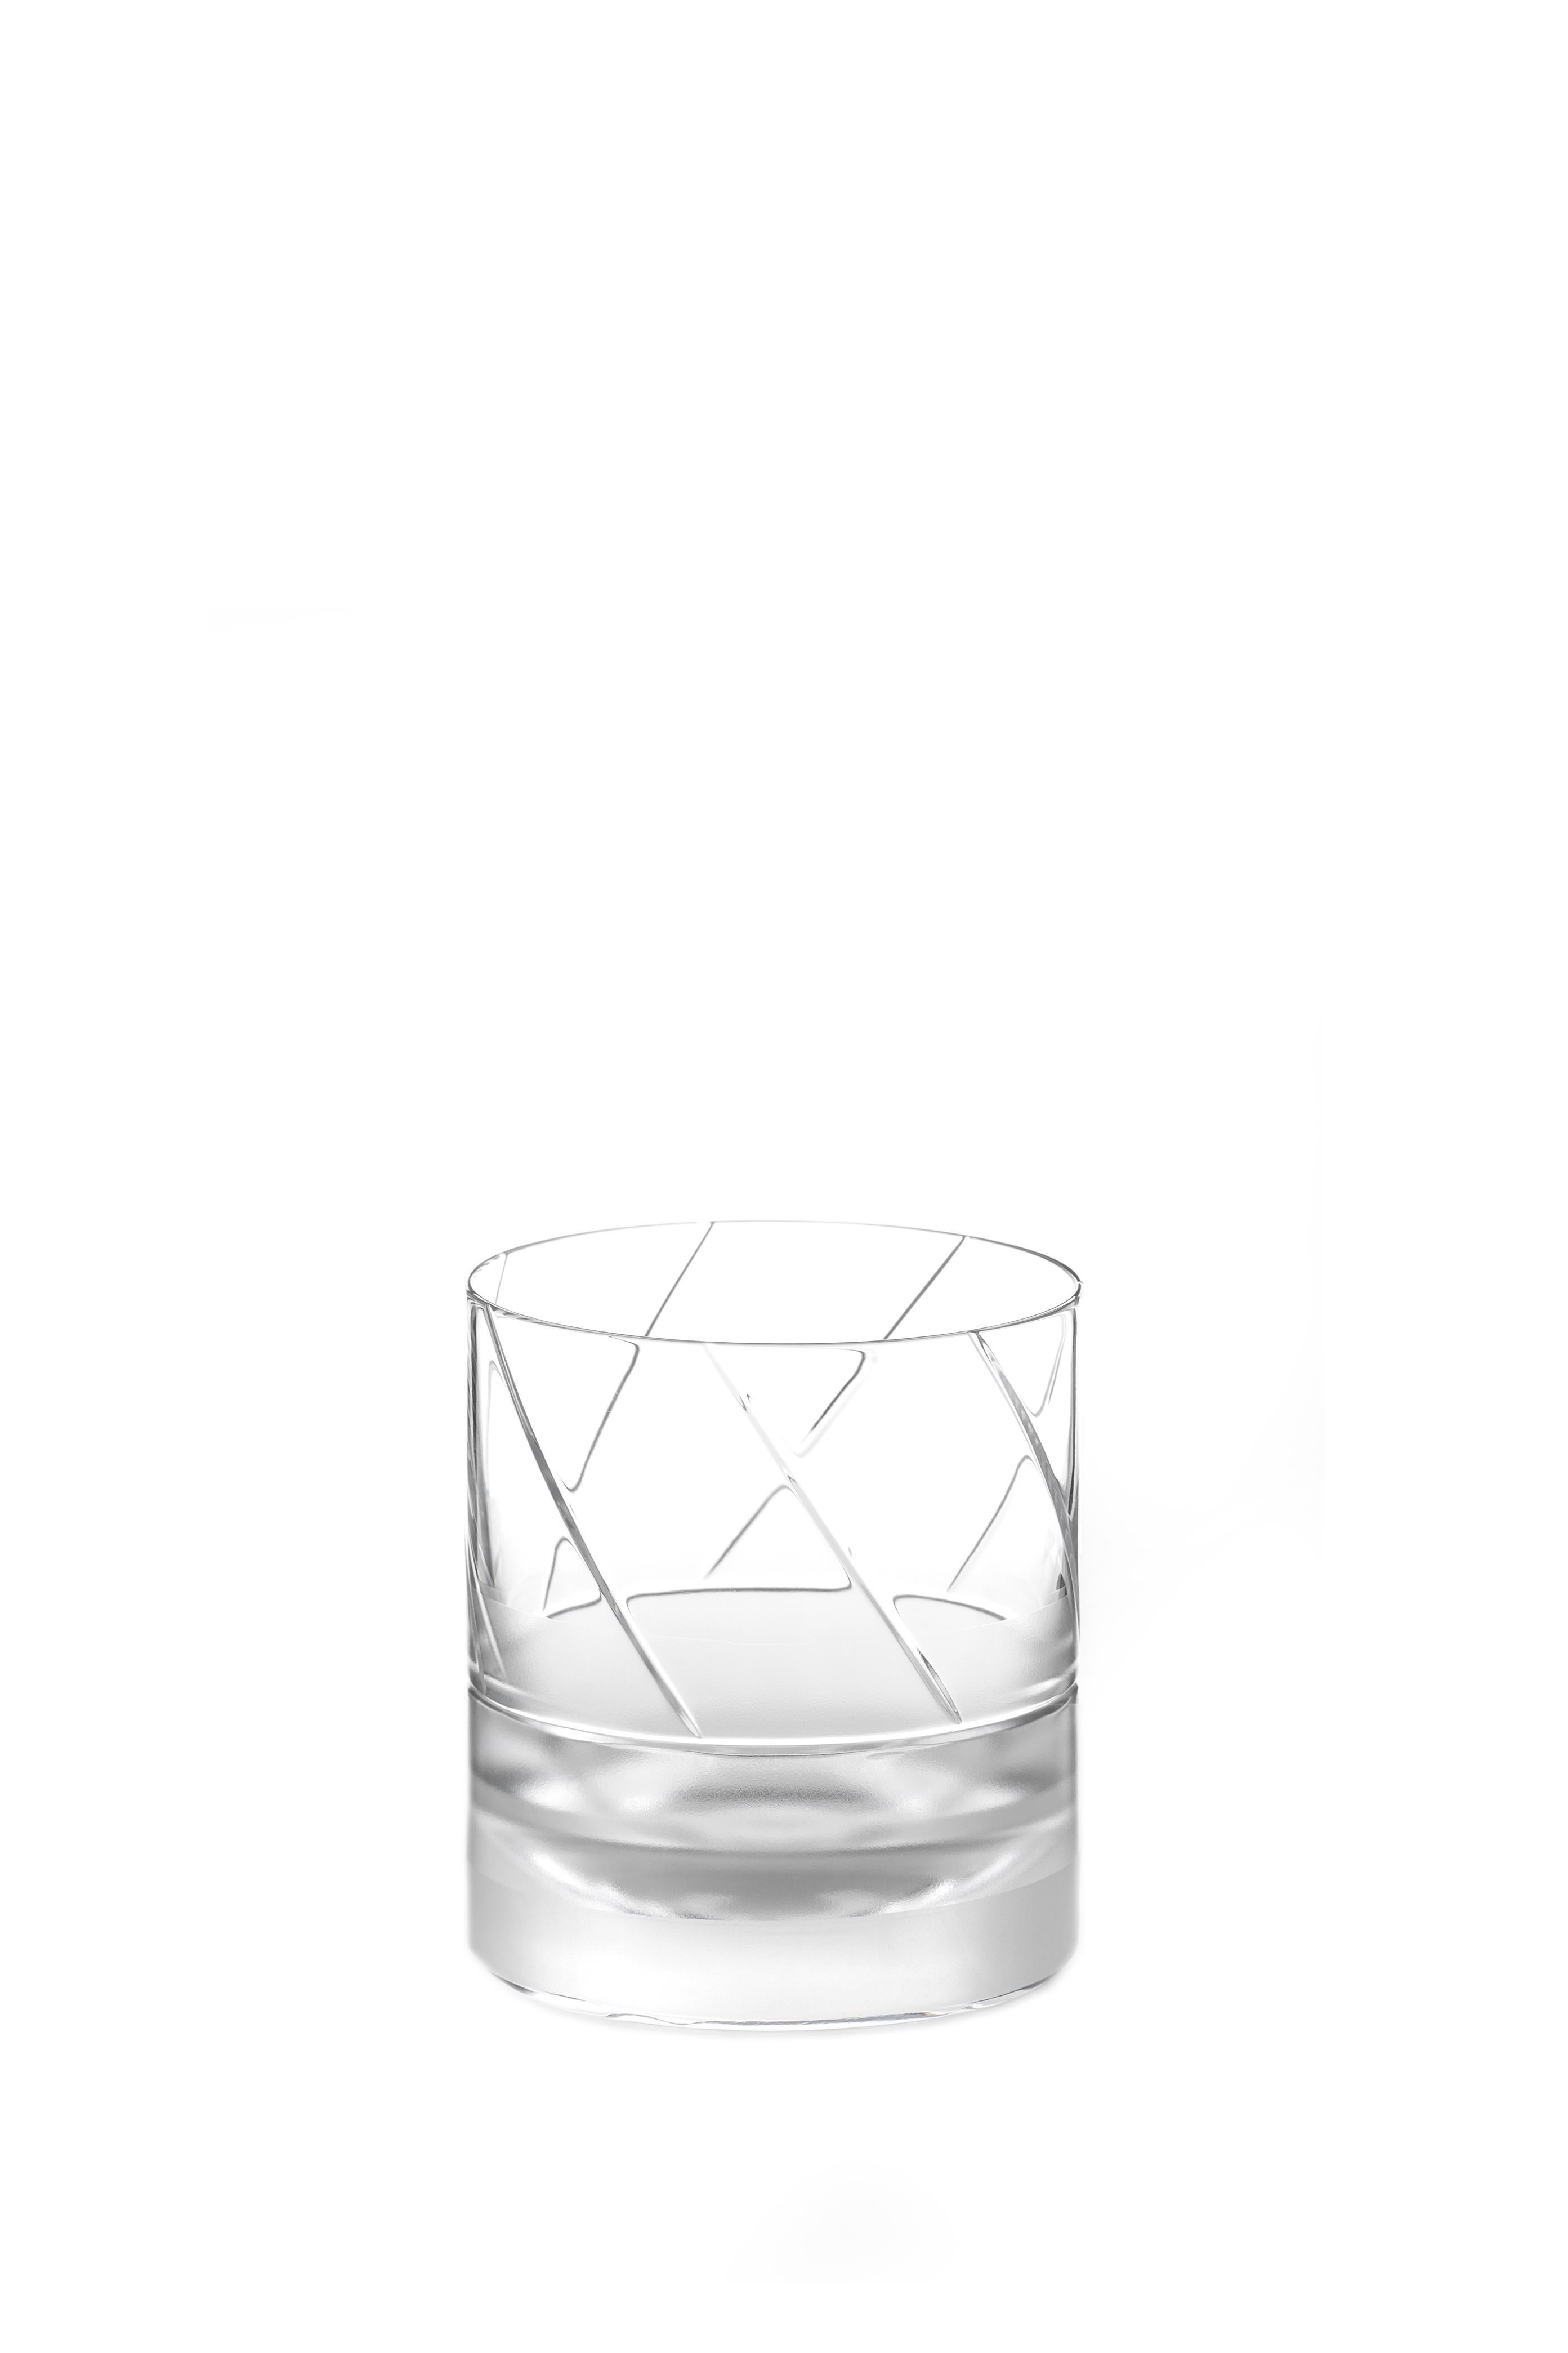 Scholten & Baijings Handmade Irish Crystal Whiskey Glass Elements CUT NO. II For Sale 1